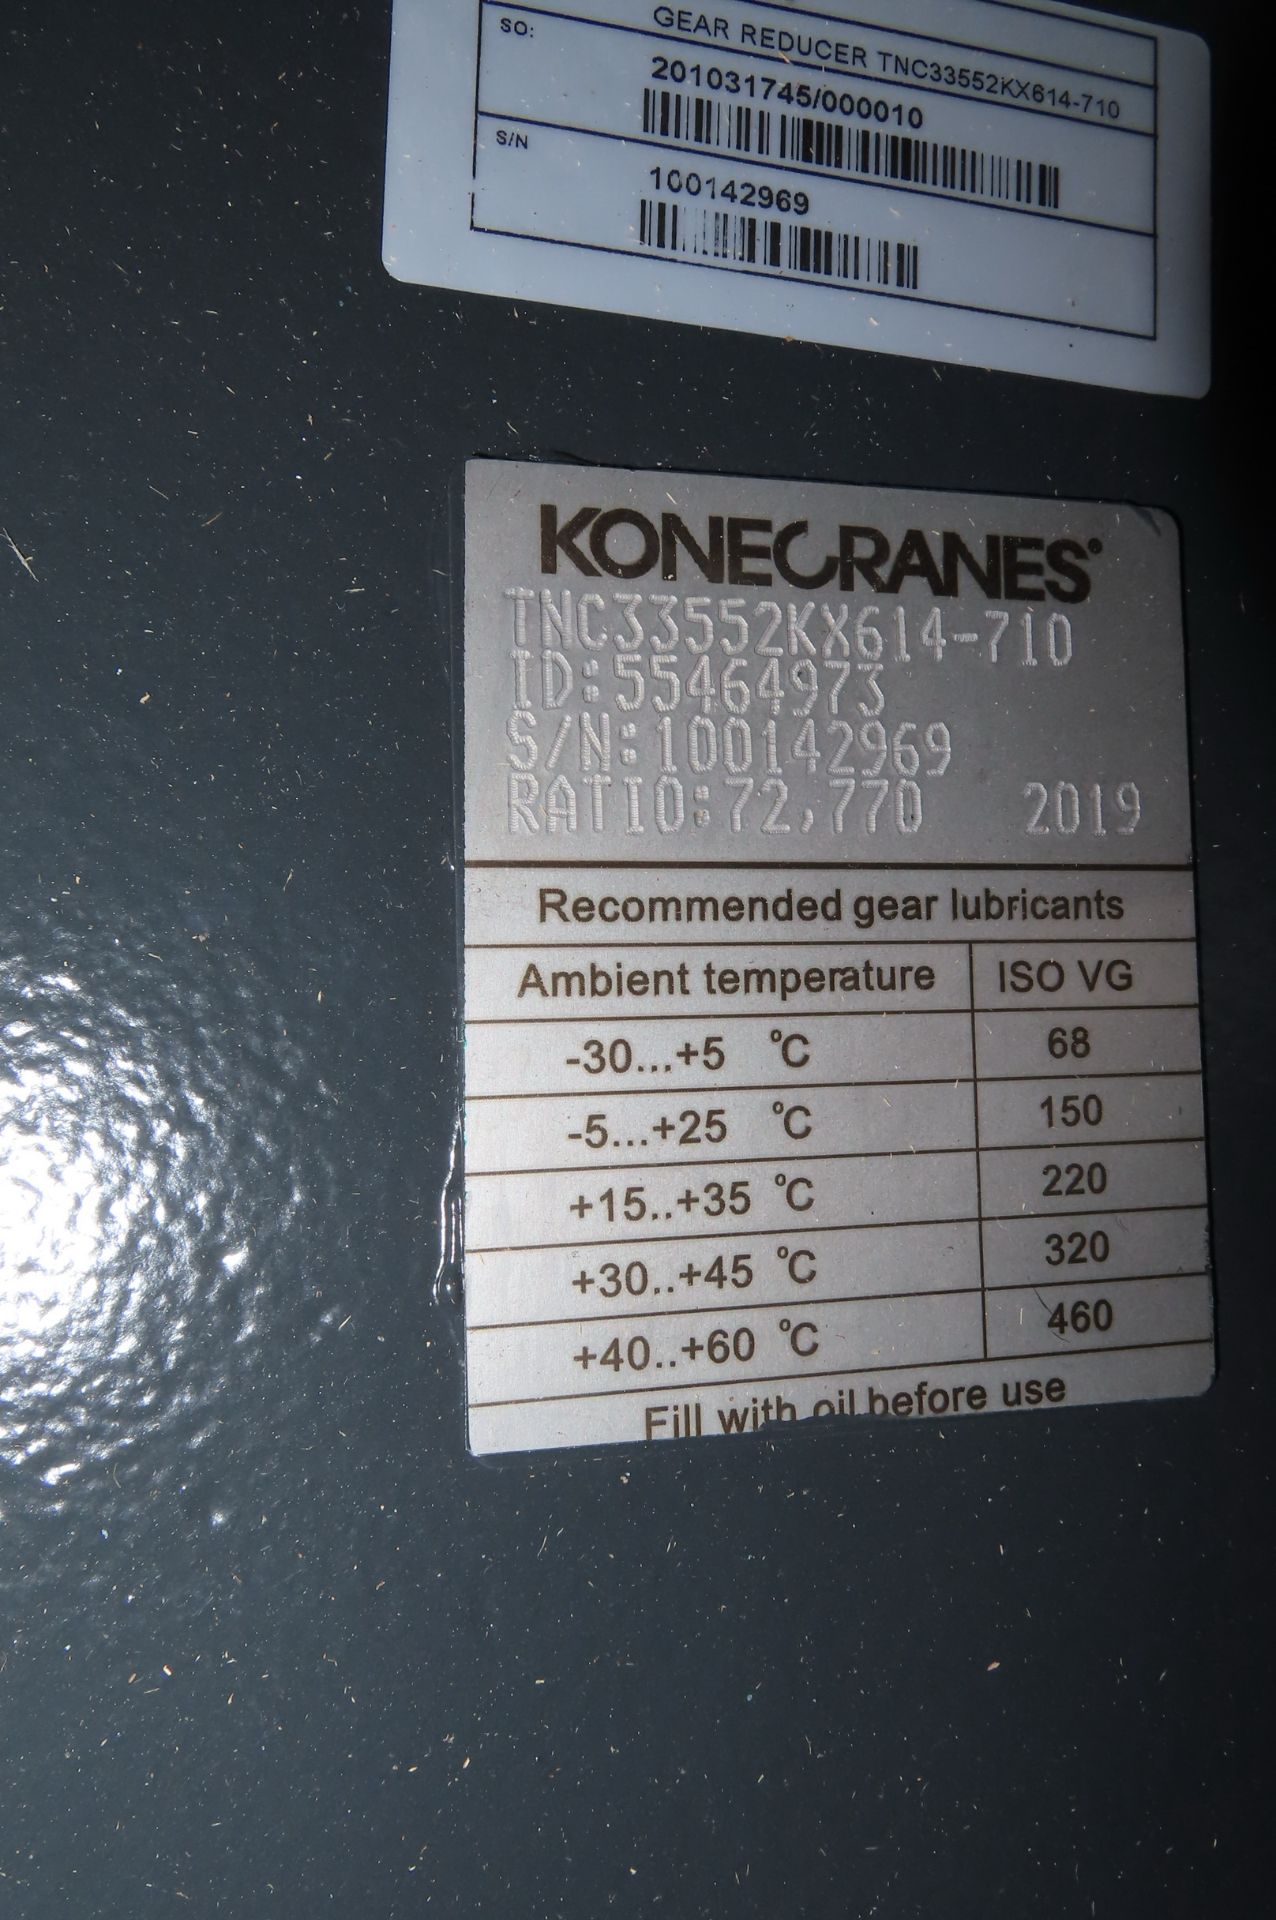 2019 Konecranes 33552KX614-710 reducer gear, 72.770 ratio, s/n 100142969 (never installed) - - Image 4 of 4